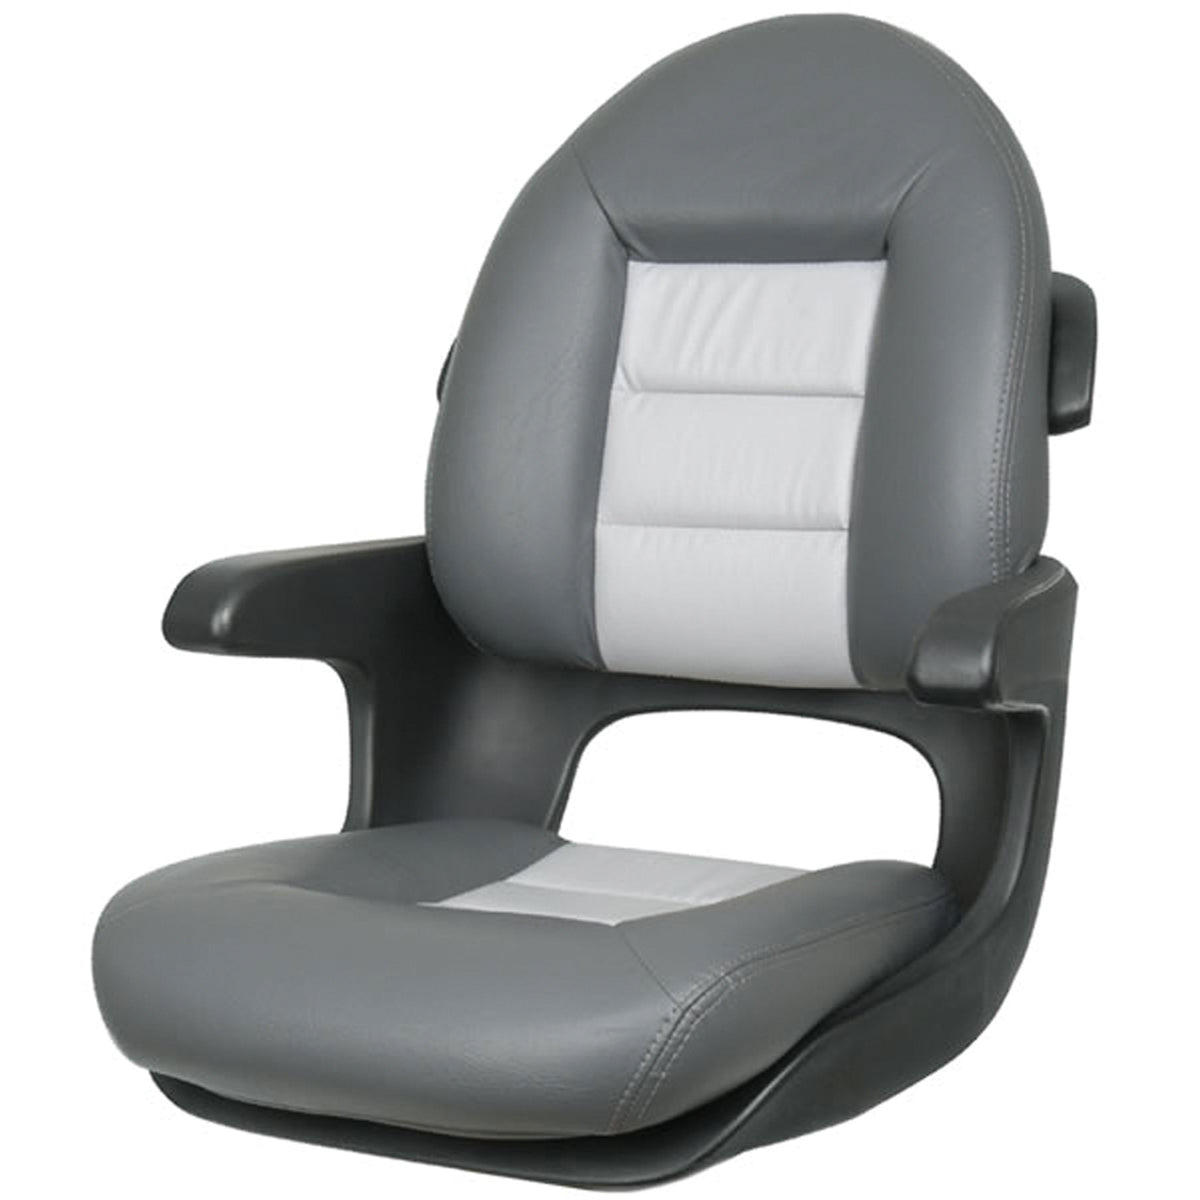 Tempress 57017 Elite Helm High-Back Boat Seat - Charcoal/Gray